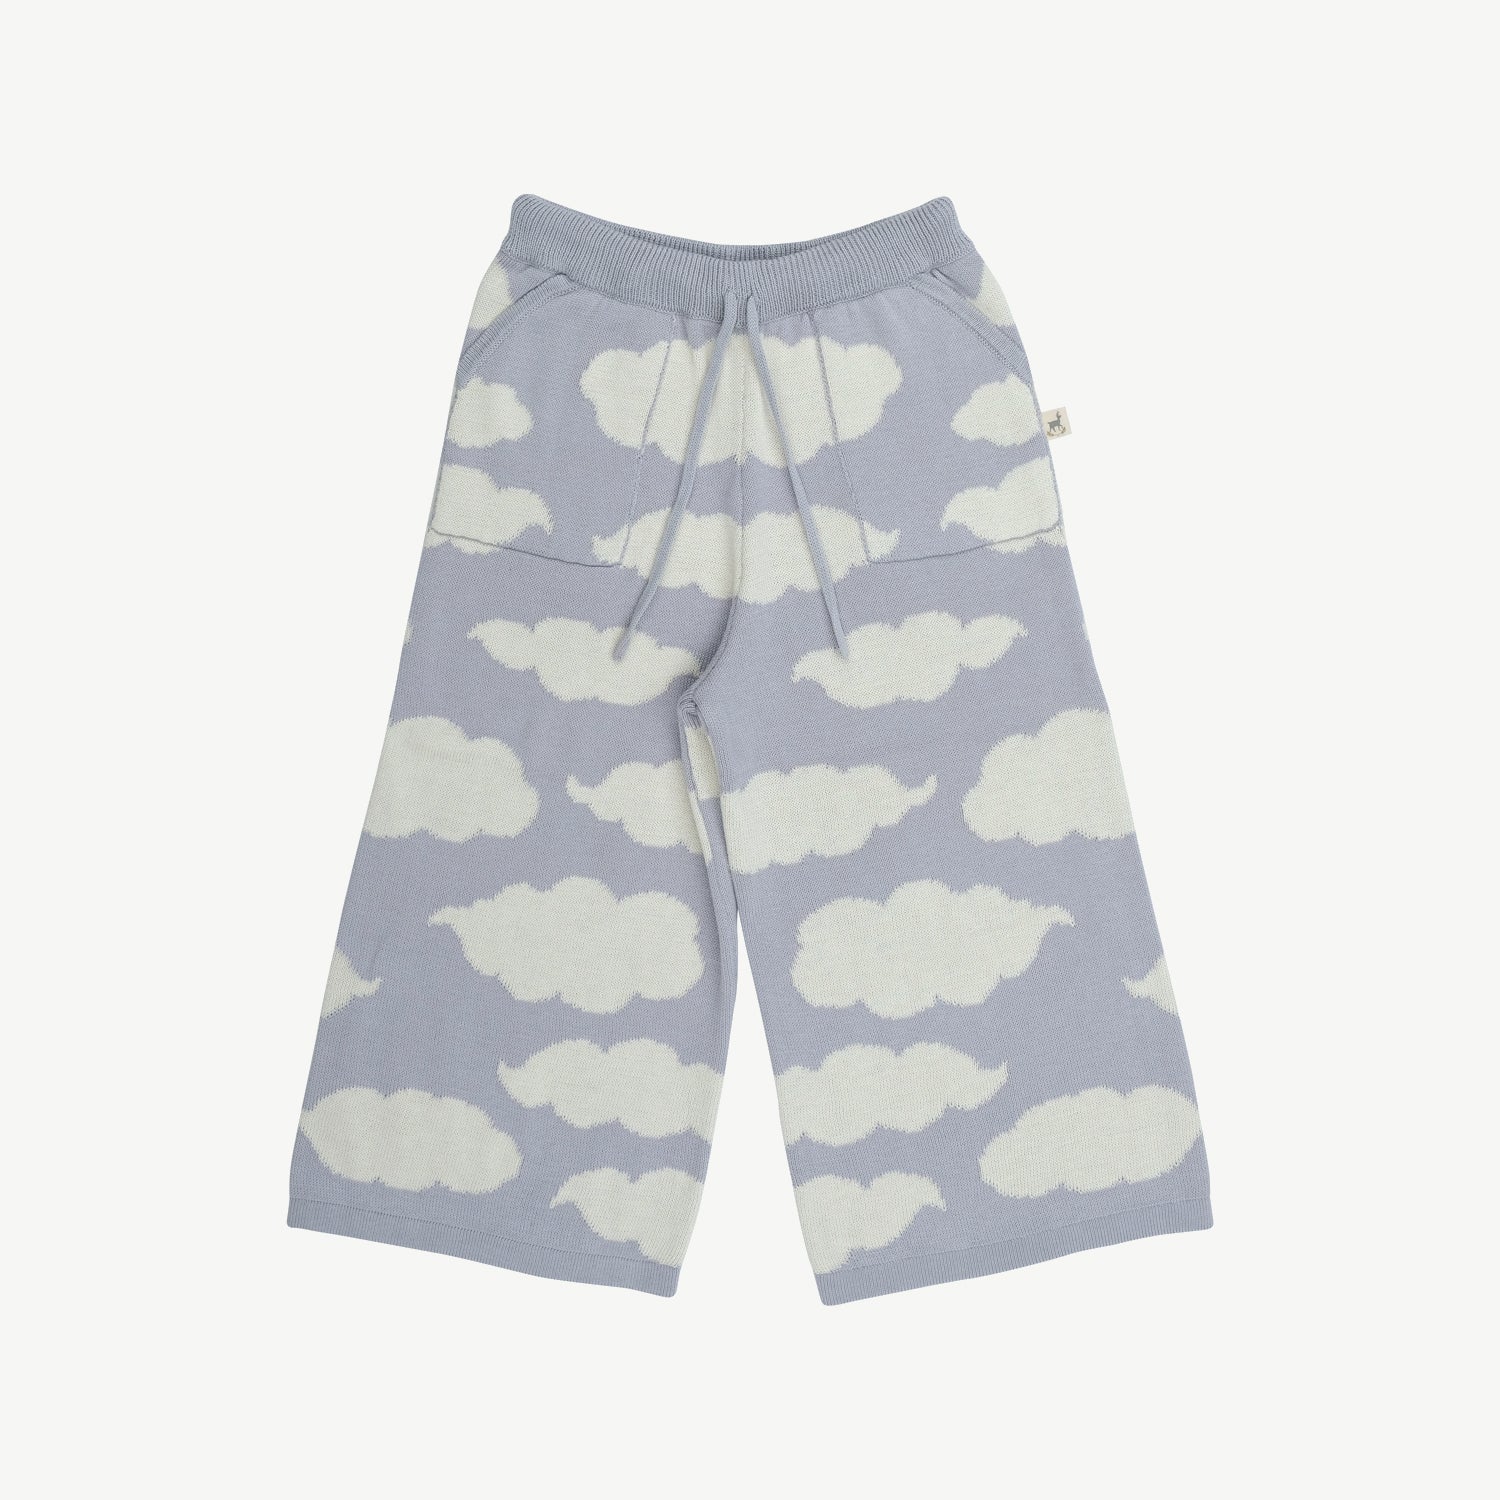 'clouds' gray knit pants